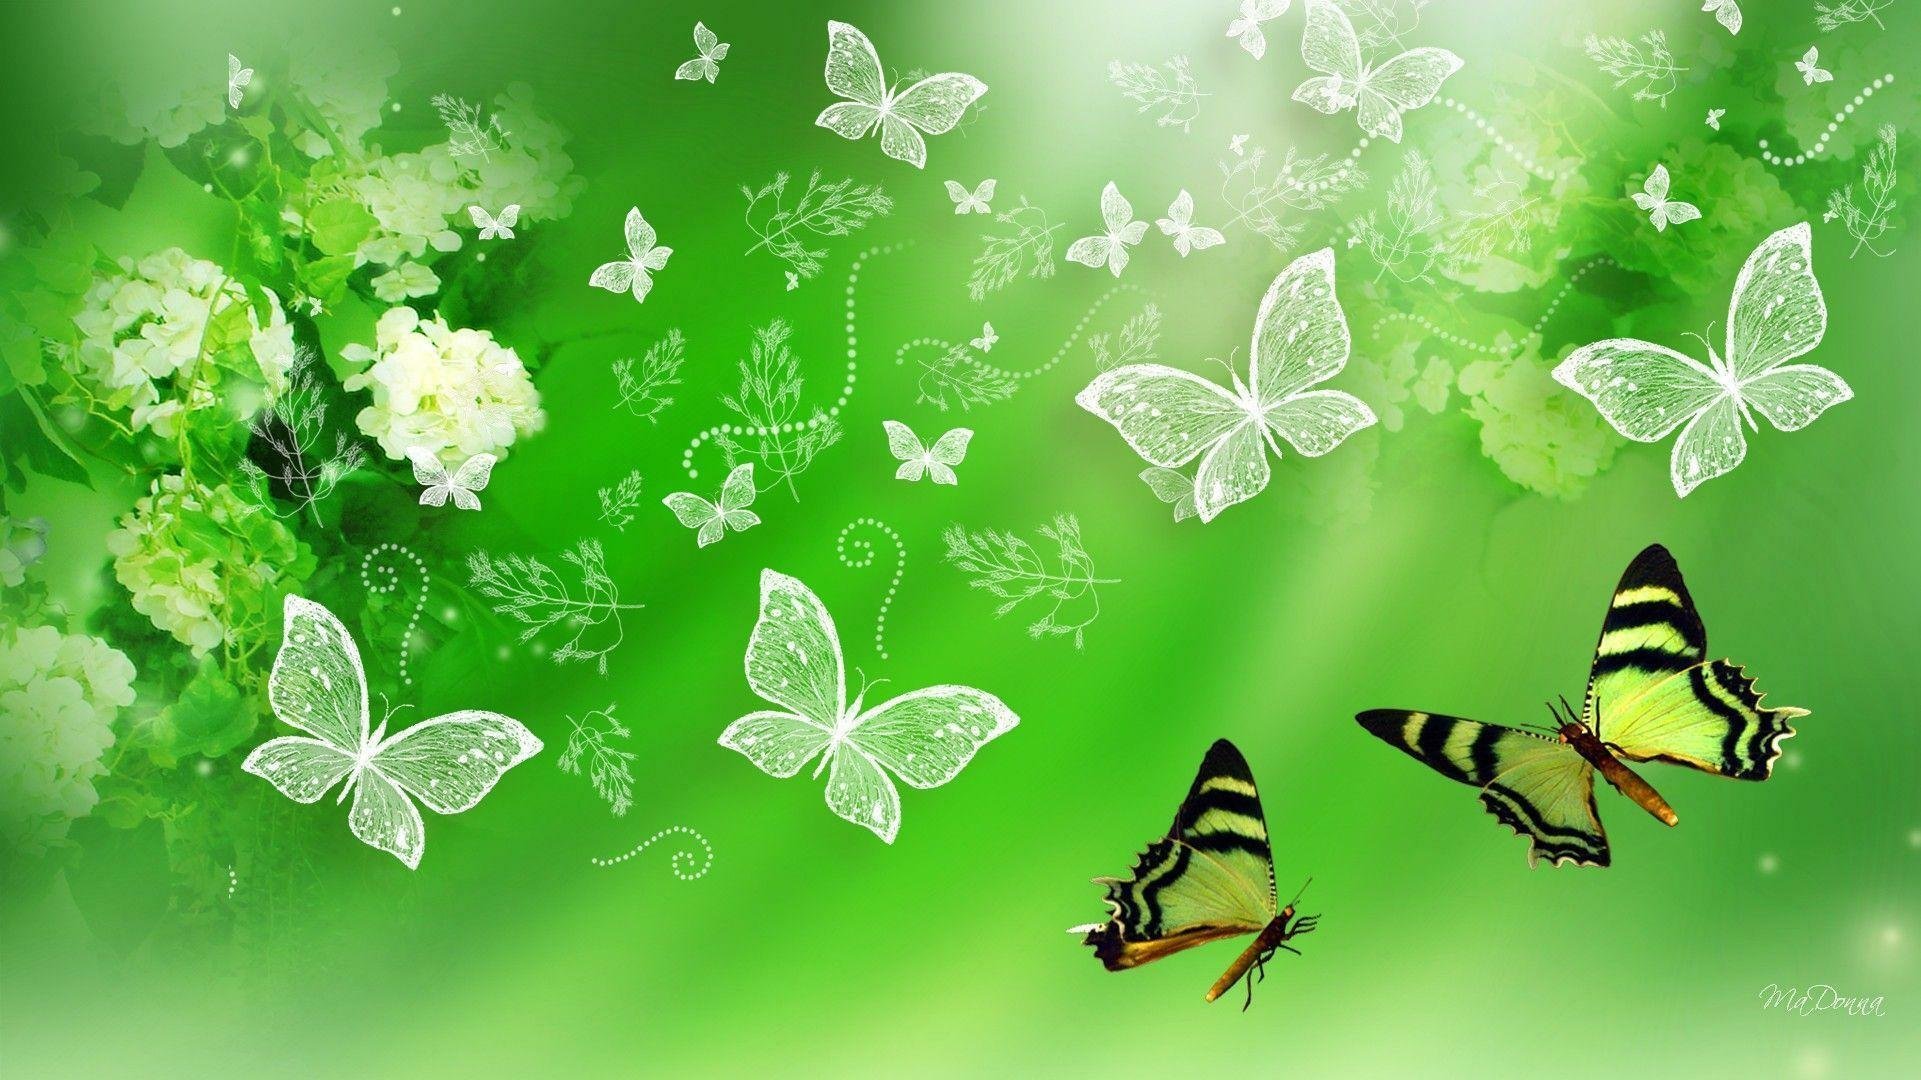 Обложка на экран телефона. Фон бабочки. Обои на рабочий стол бабочки. Бабочки цветочки. Бабочка на цветке.